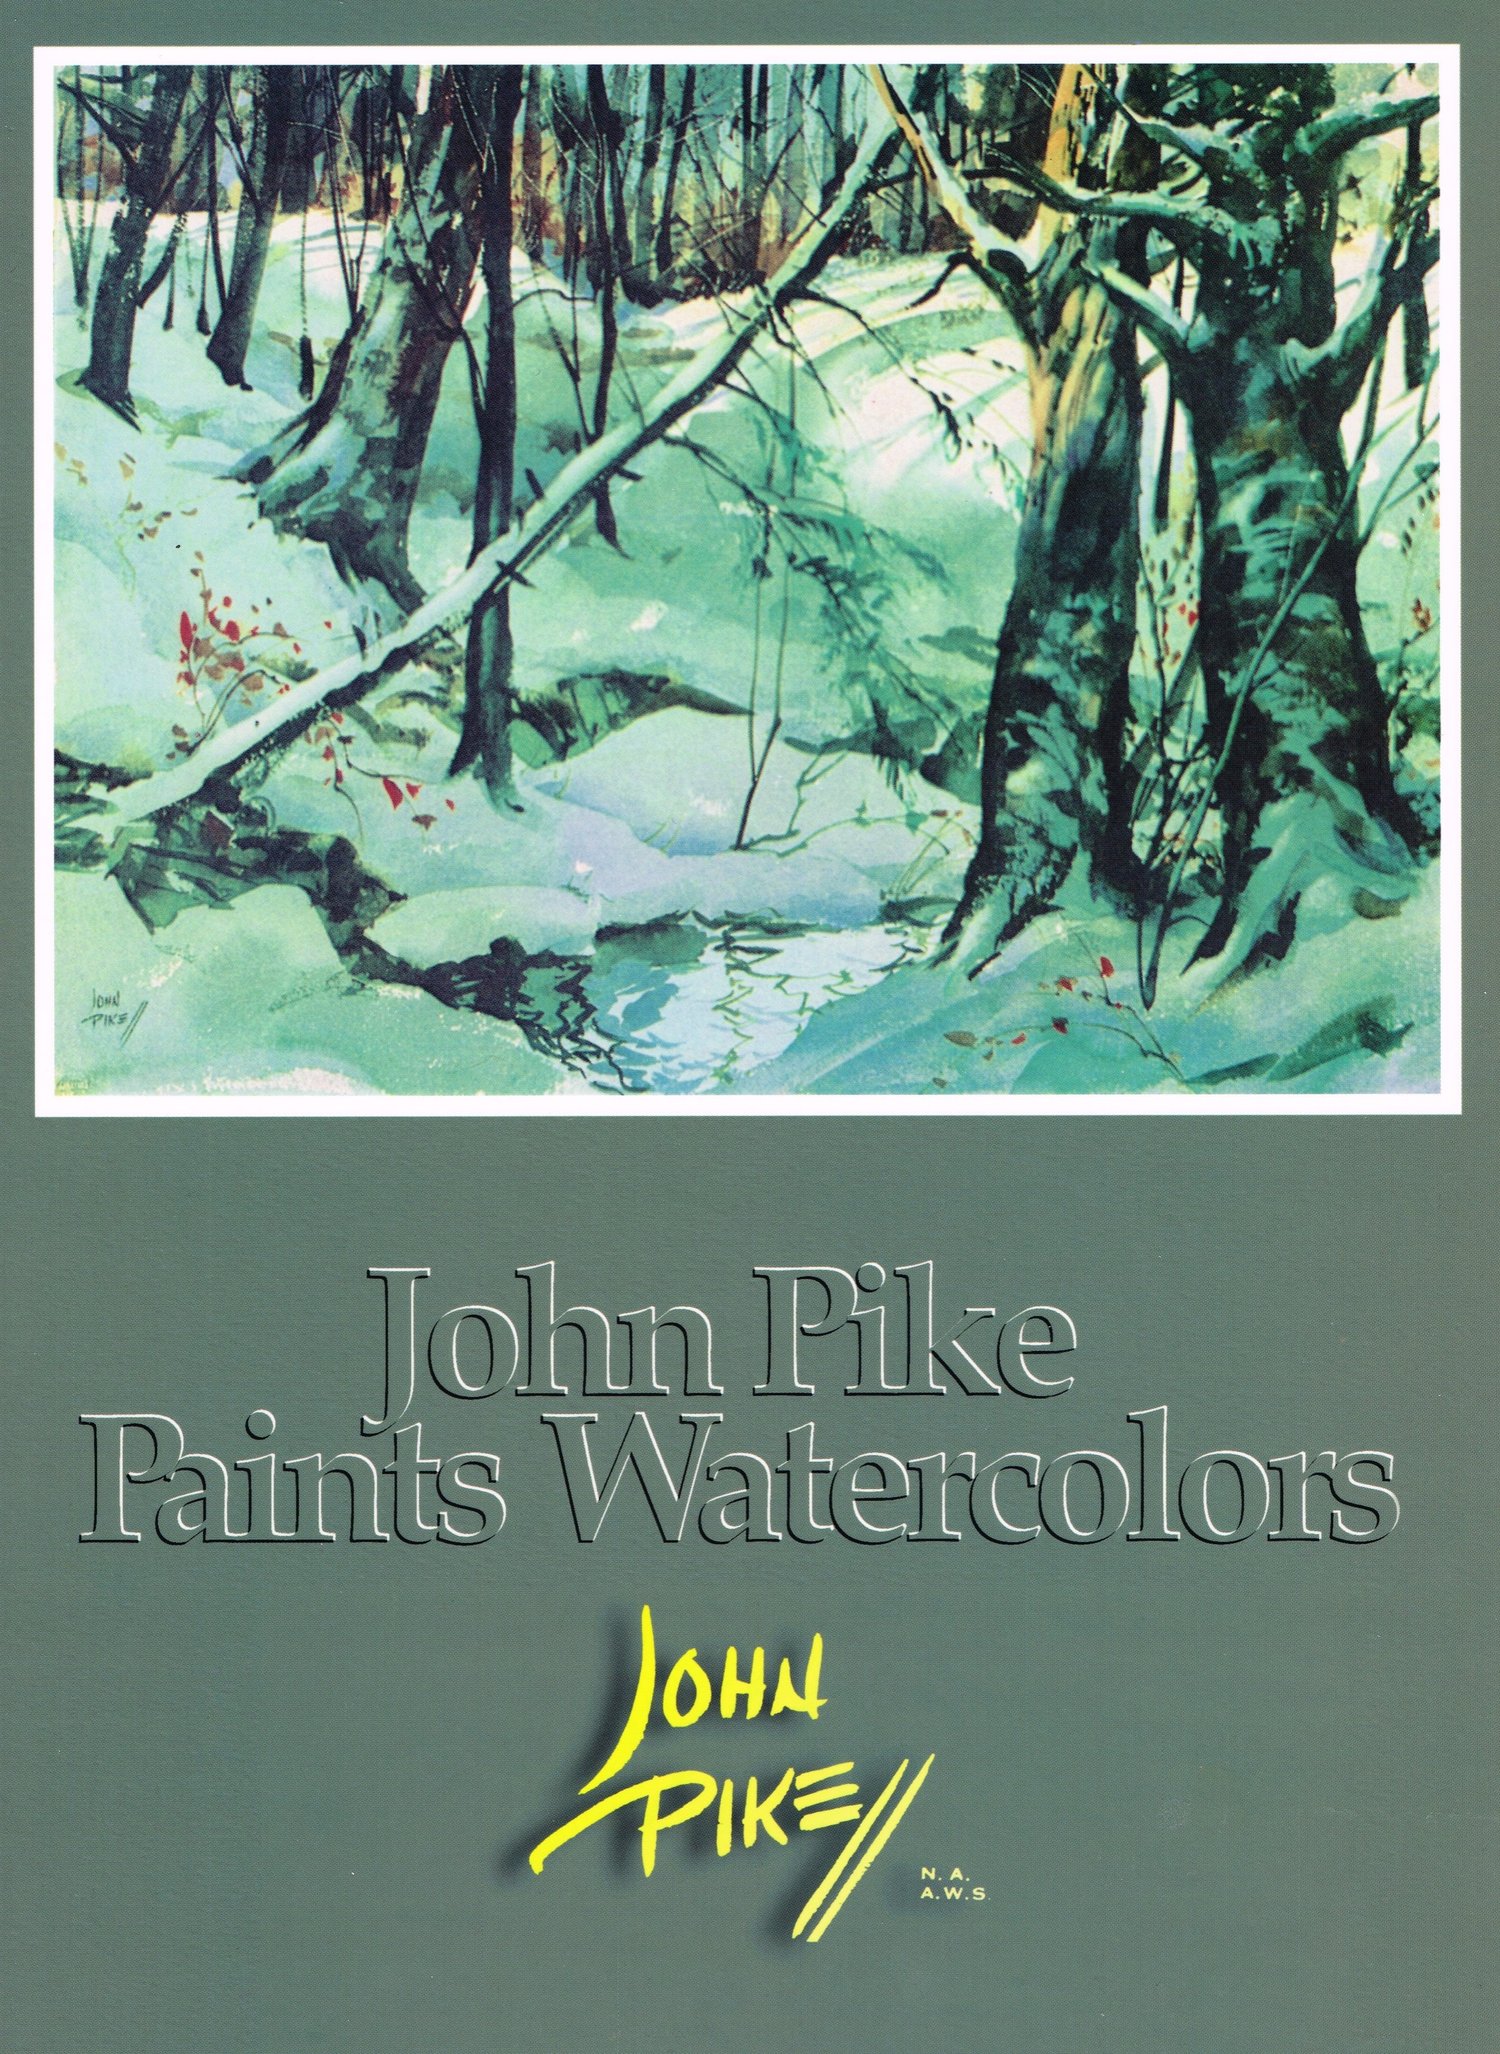 John Pike Paints Watercolors — John Pike Art Products